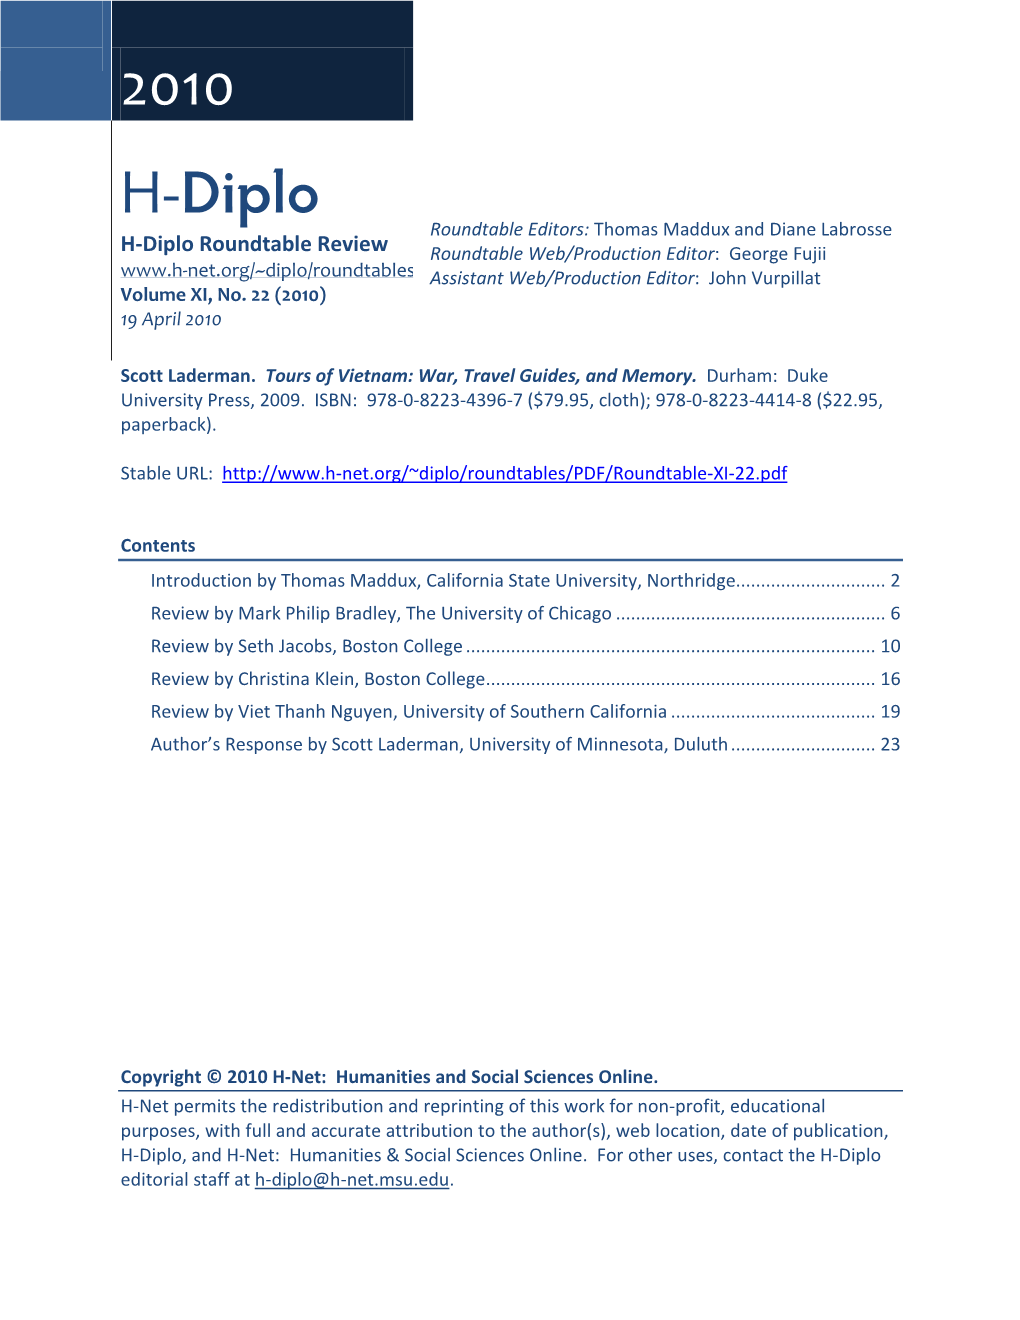 H-Diplo Roundtable, Vol. XI, No. 19 (2010)